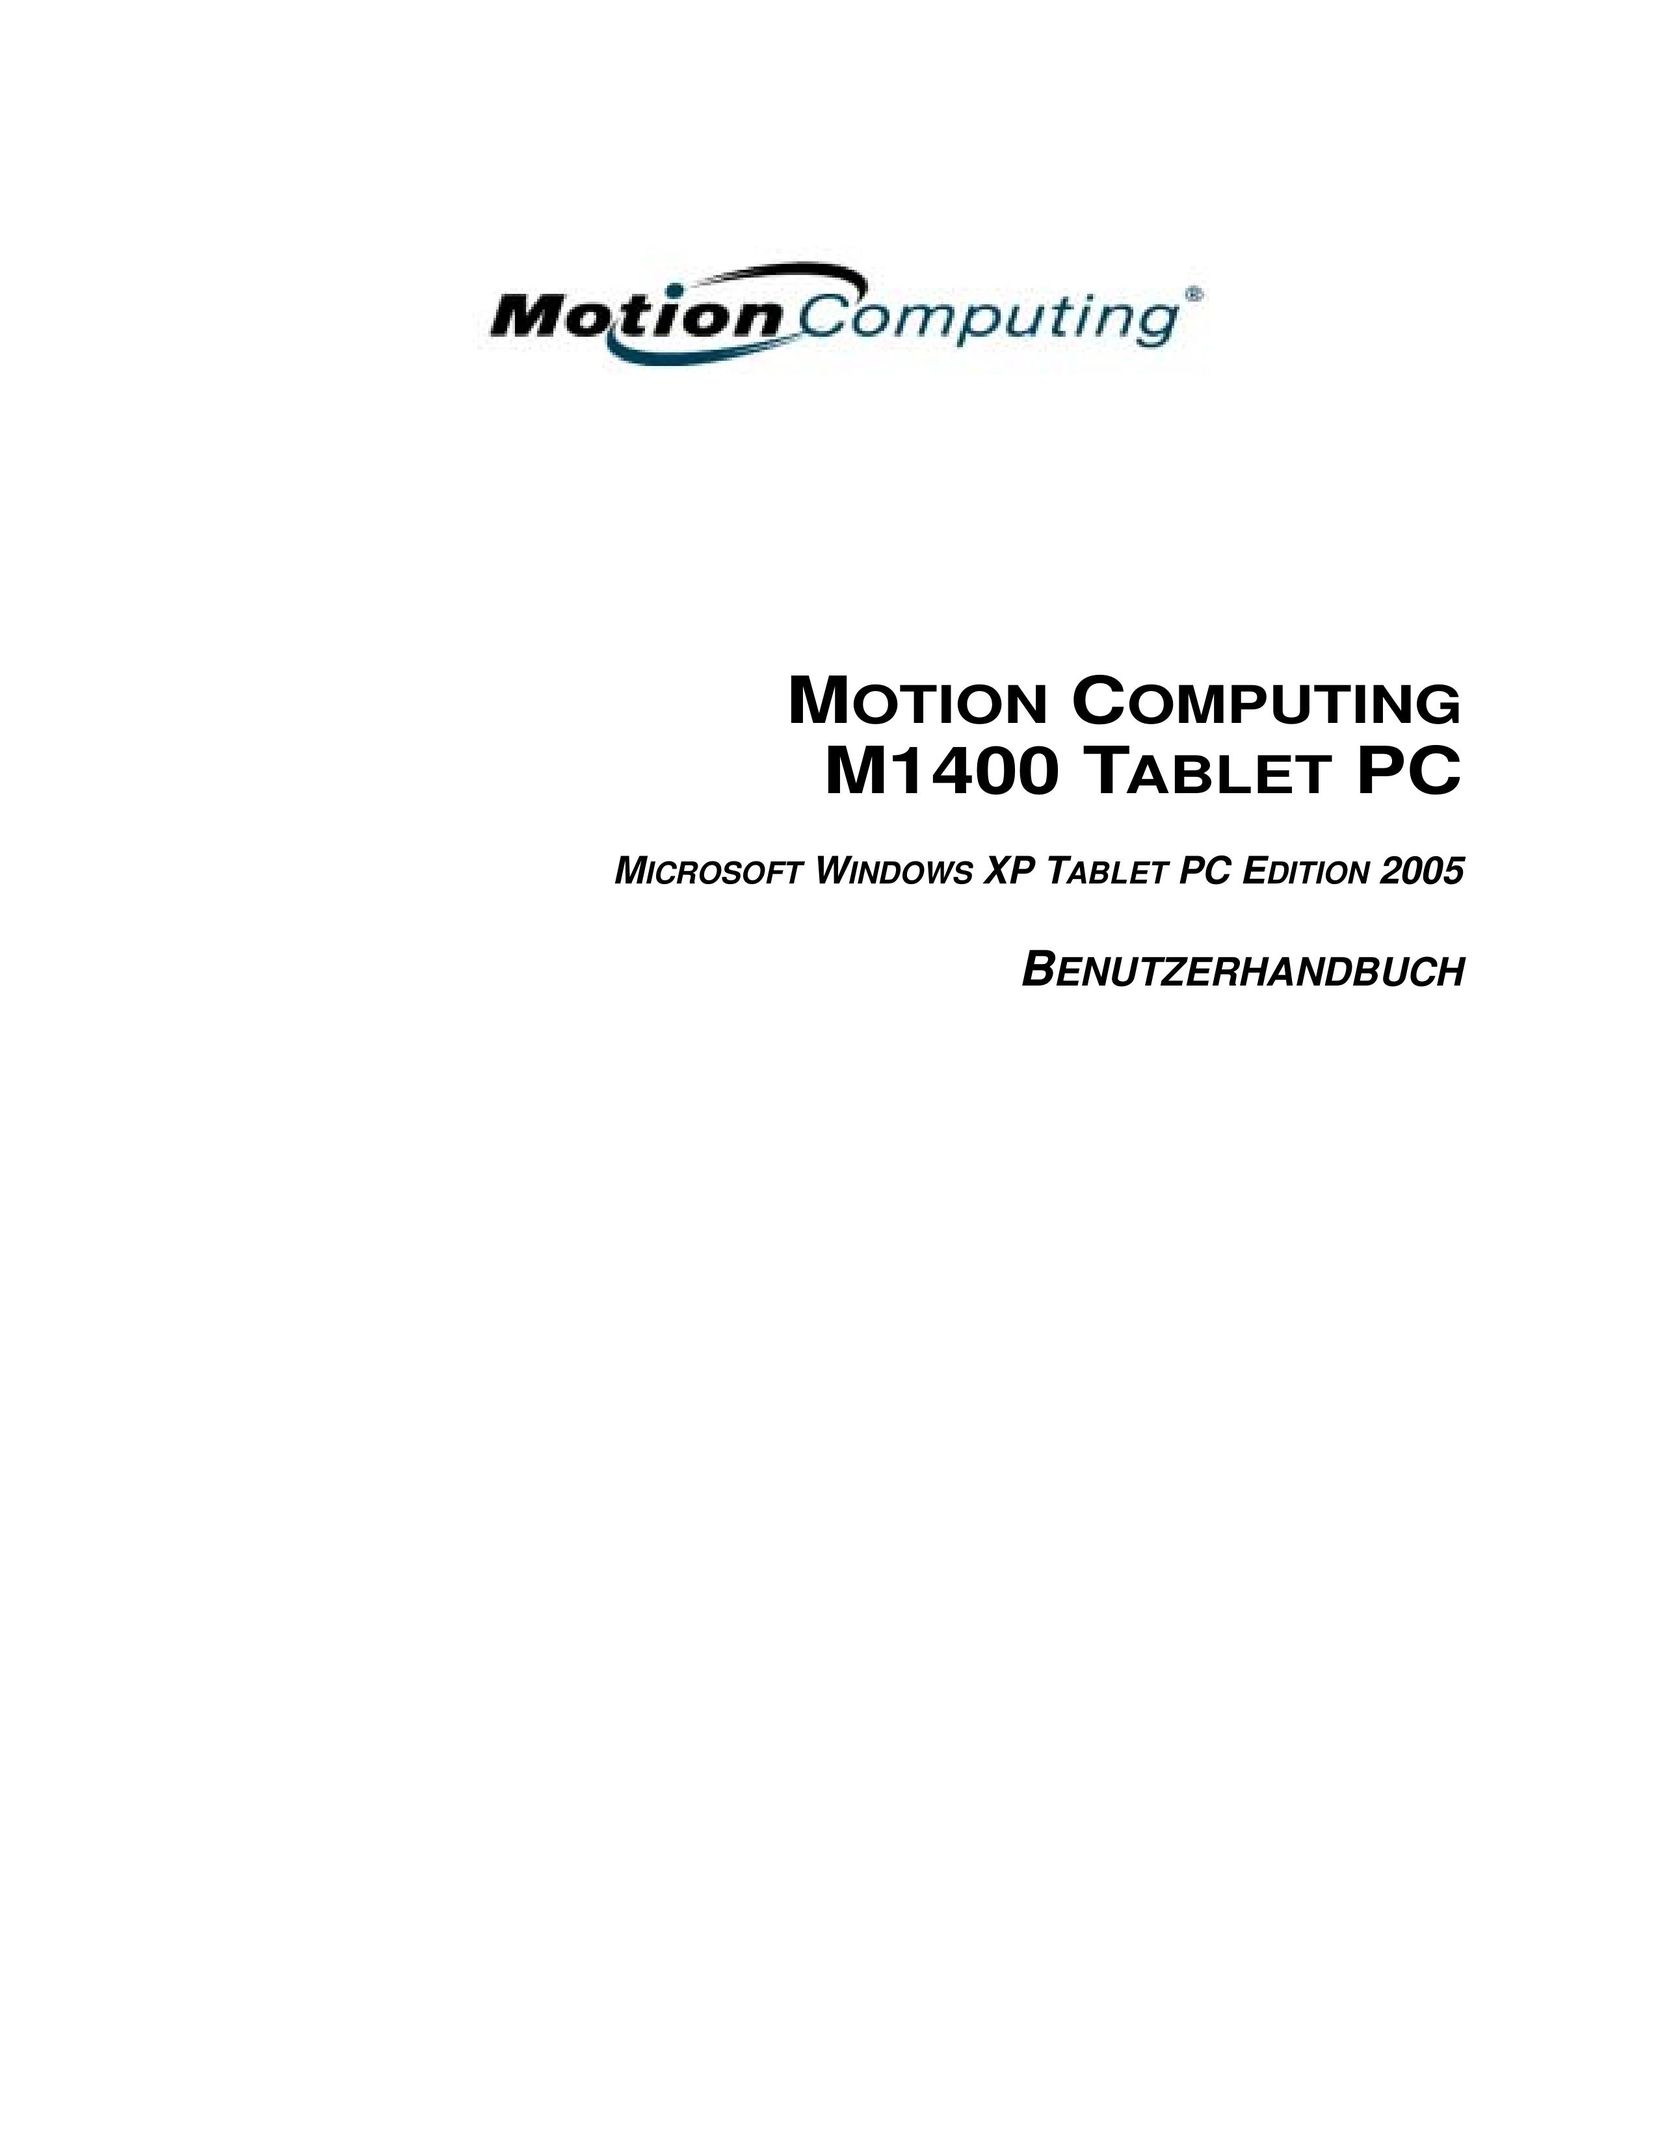 Motion Computing M1400 Tablet User Manual